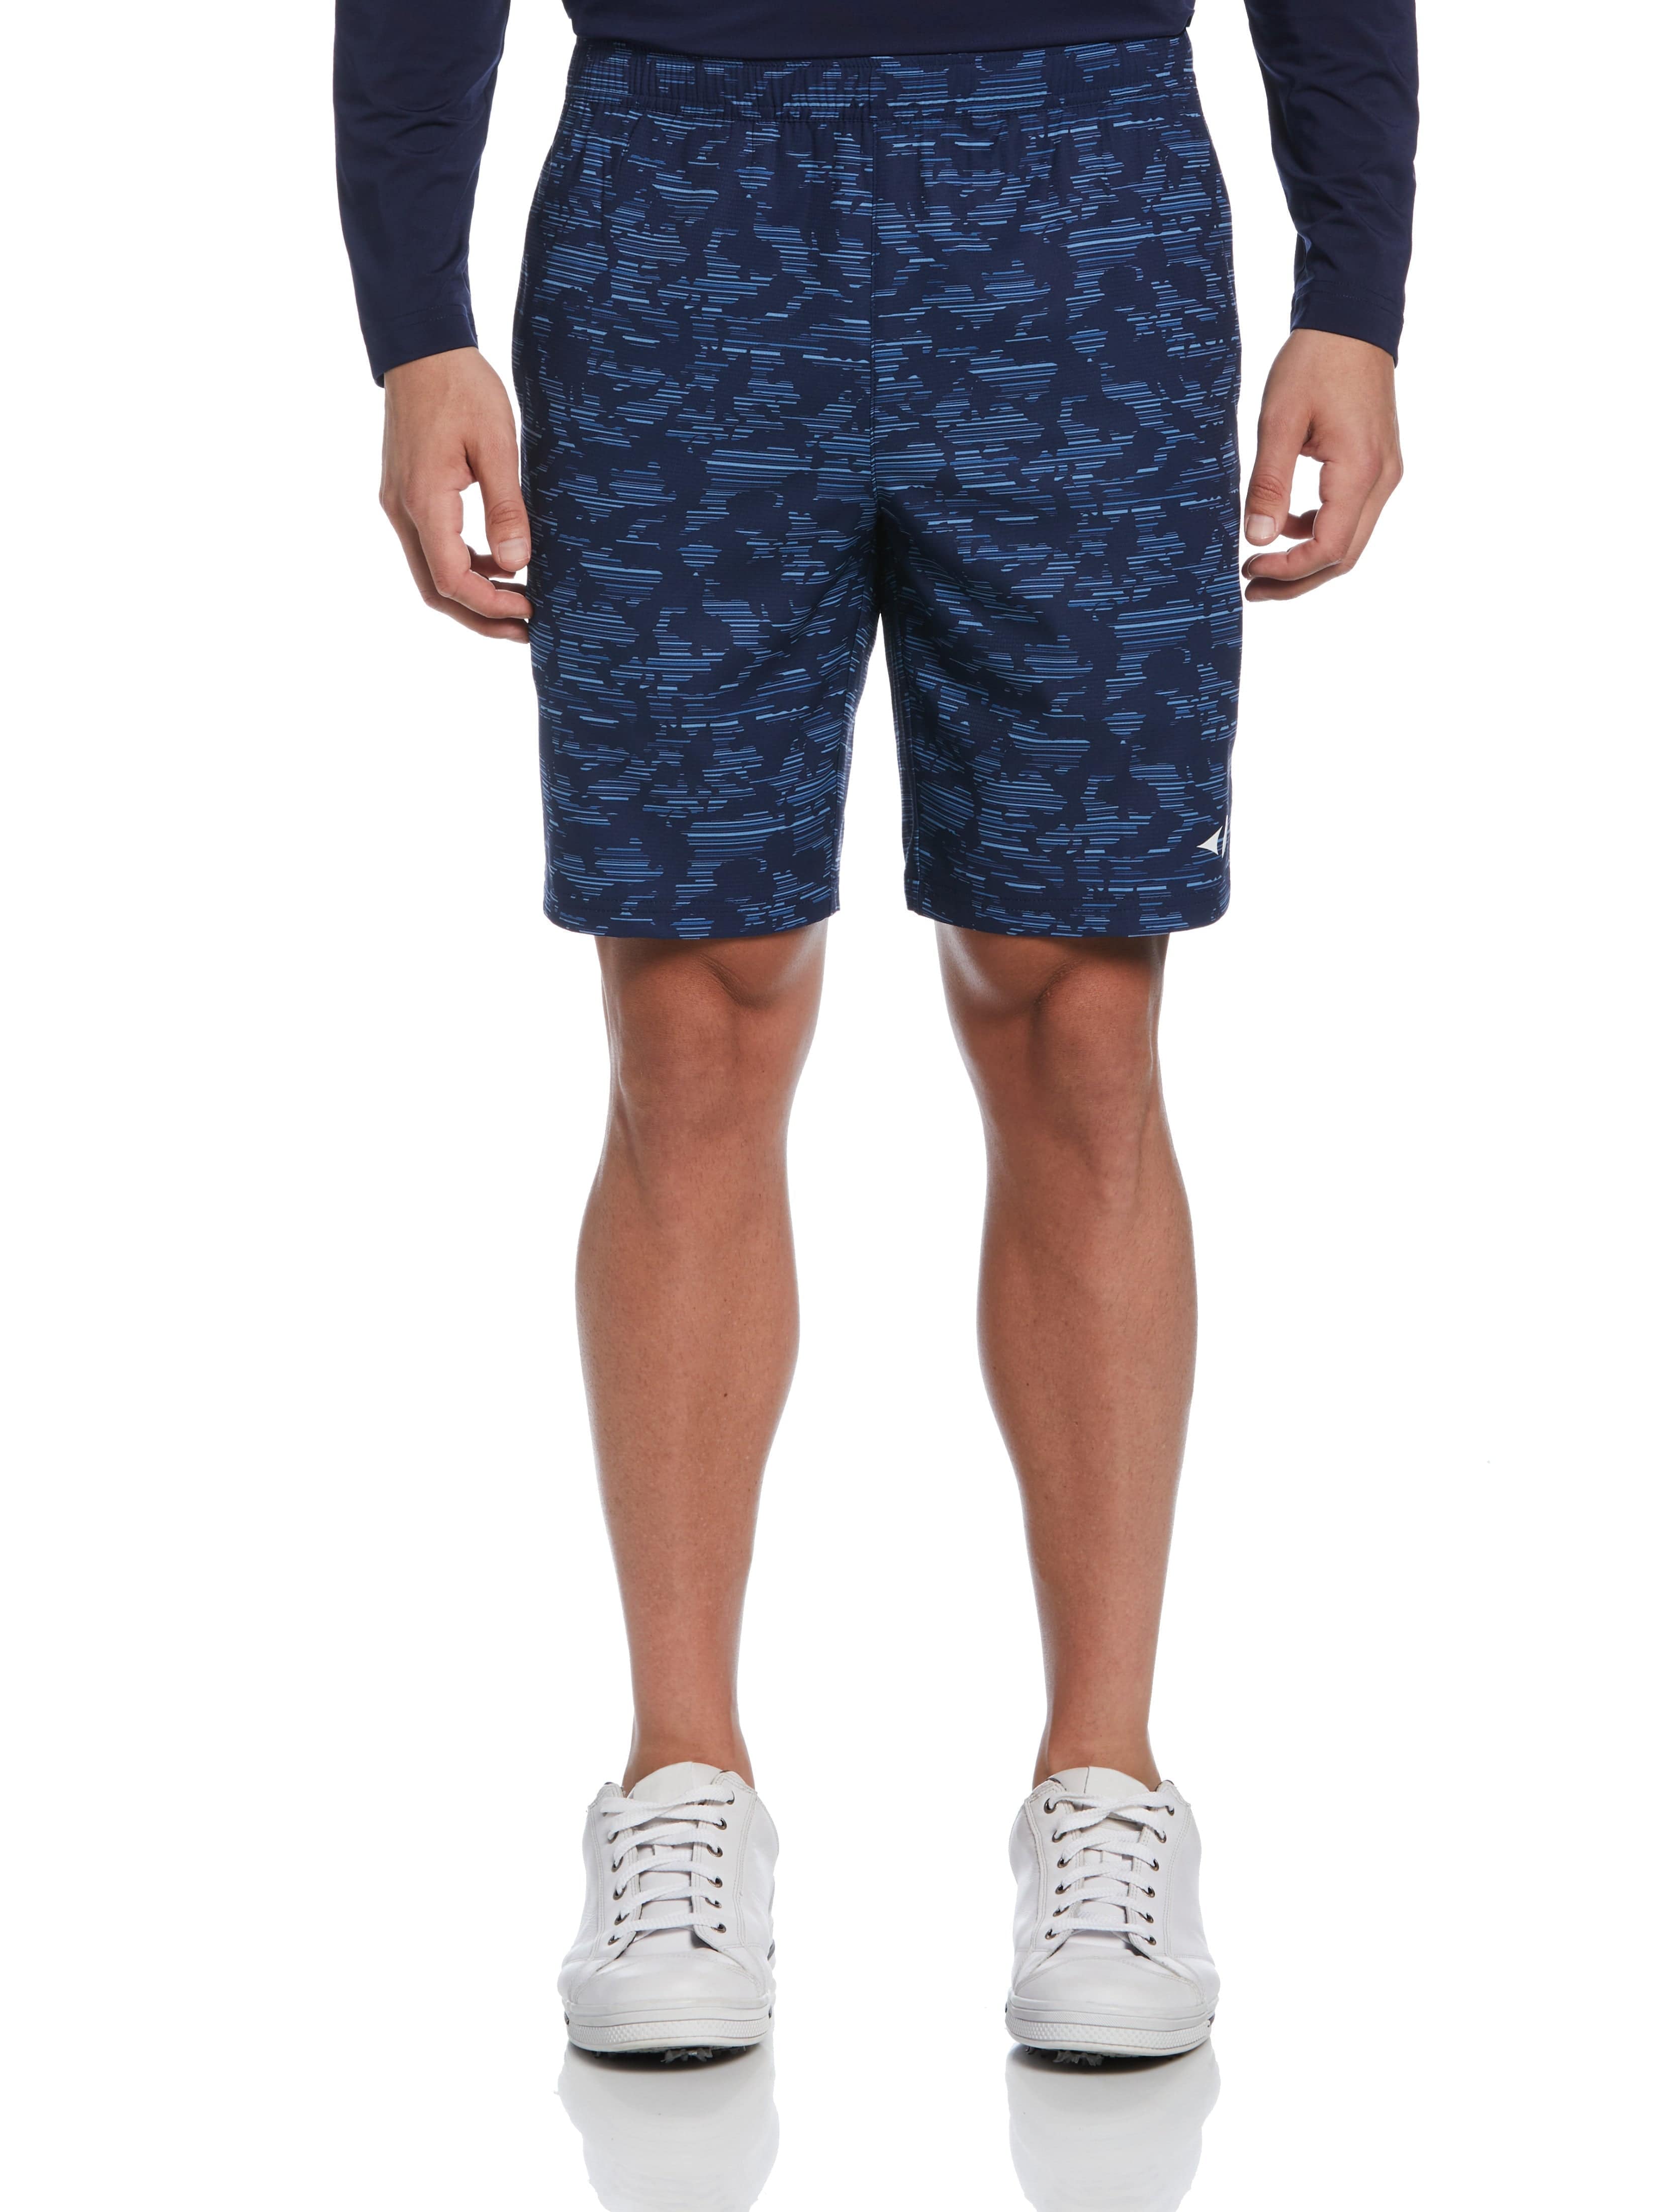 Grand Slam Mens Camo Printed Tennis Short, Size 2XL, Navy Blue, Polyester/Elastane | Golf Apparel Shop